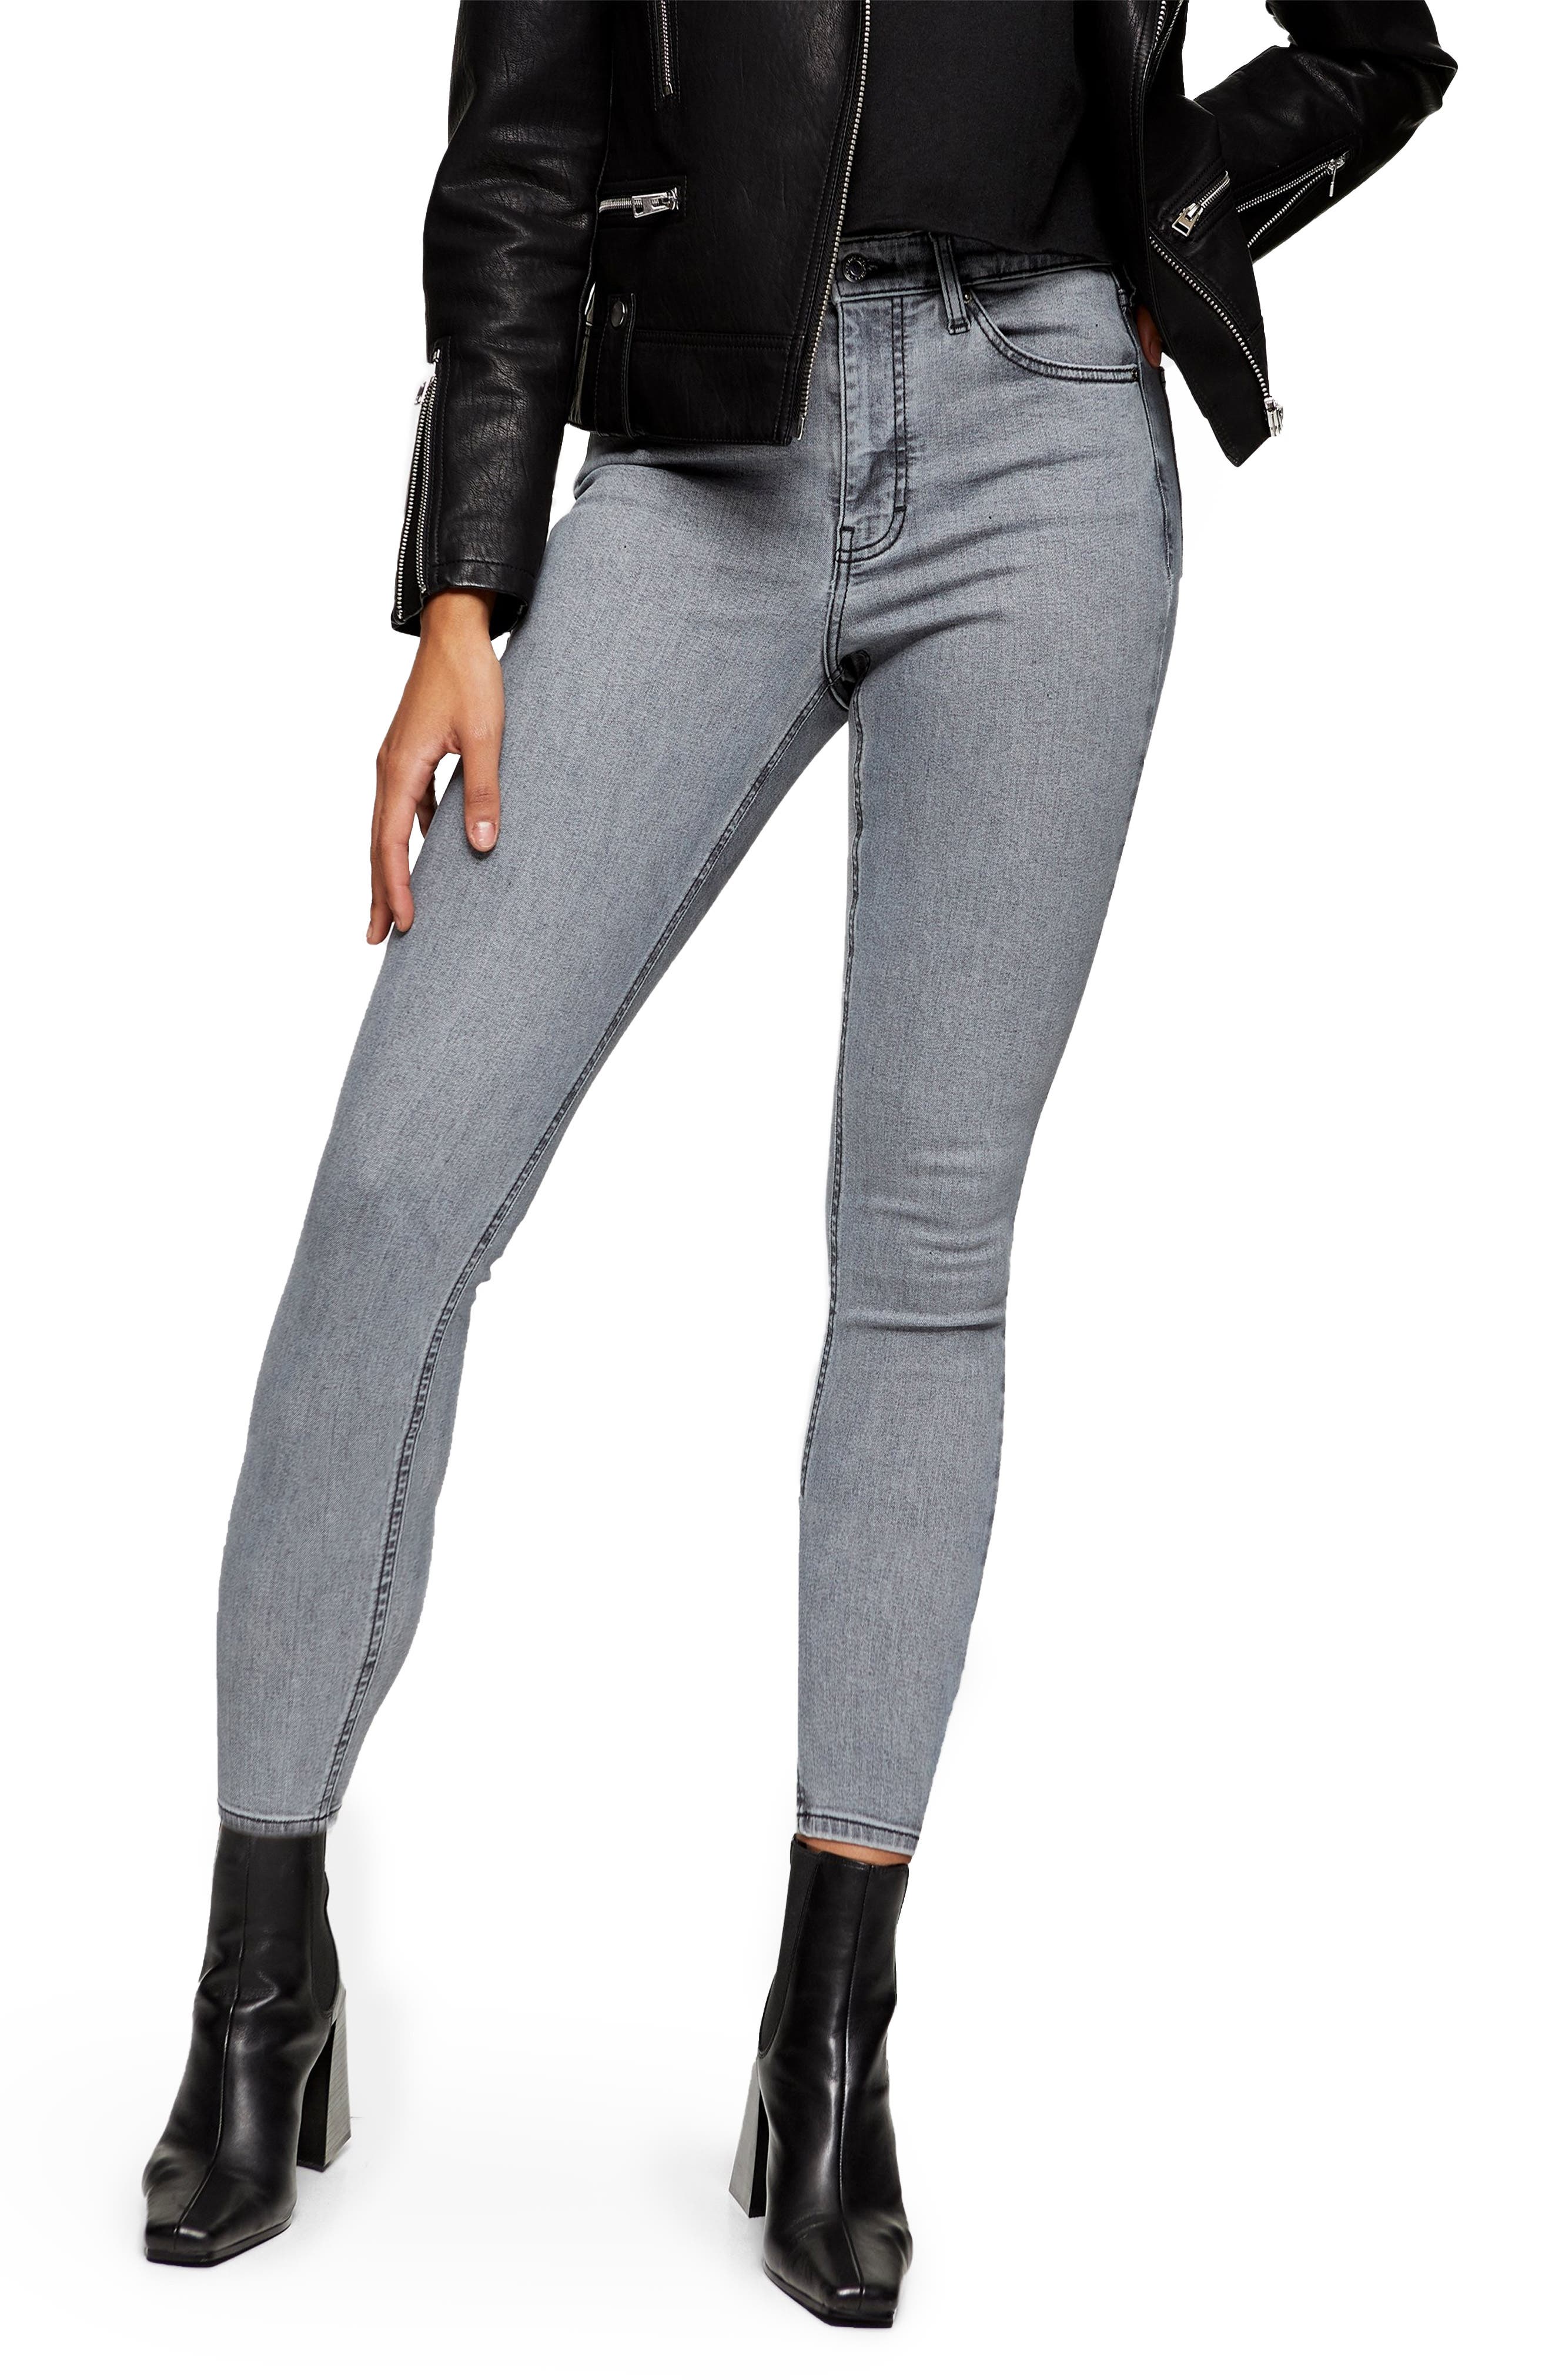 dark gray jeans women's